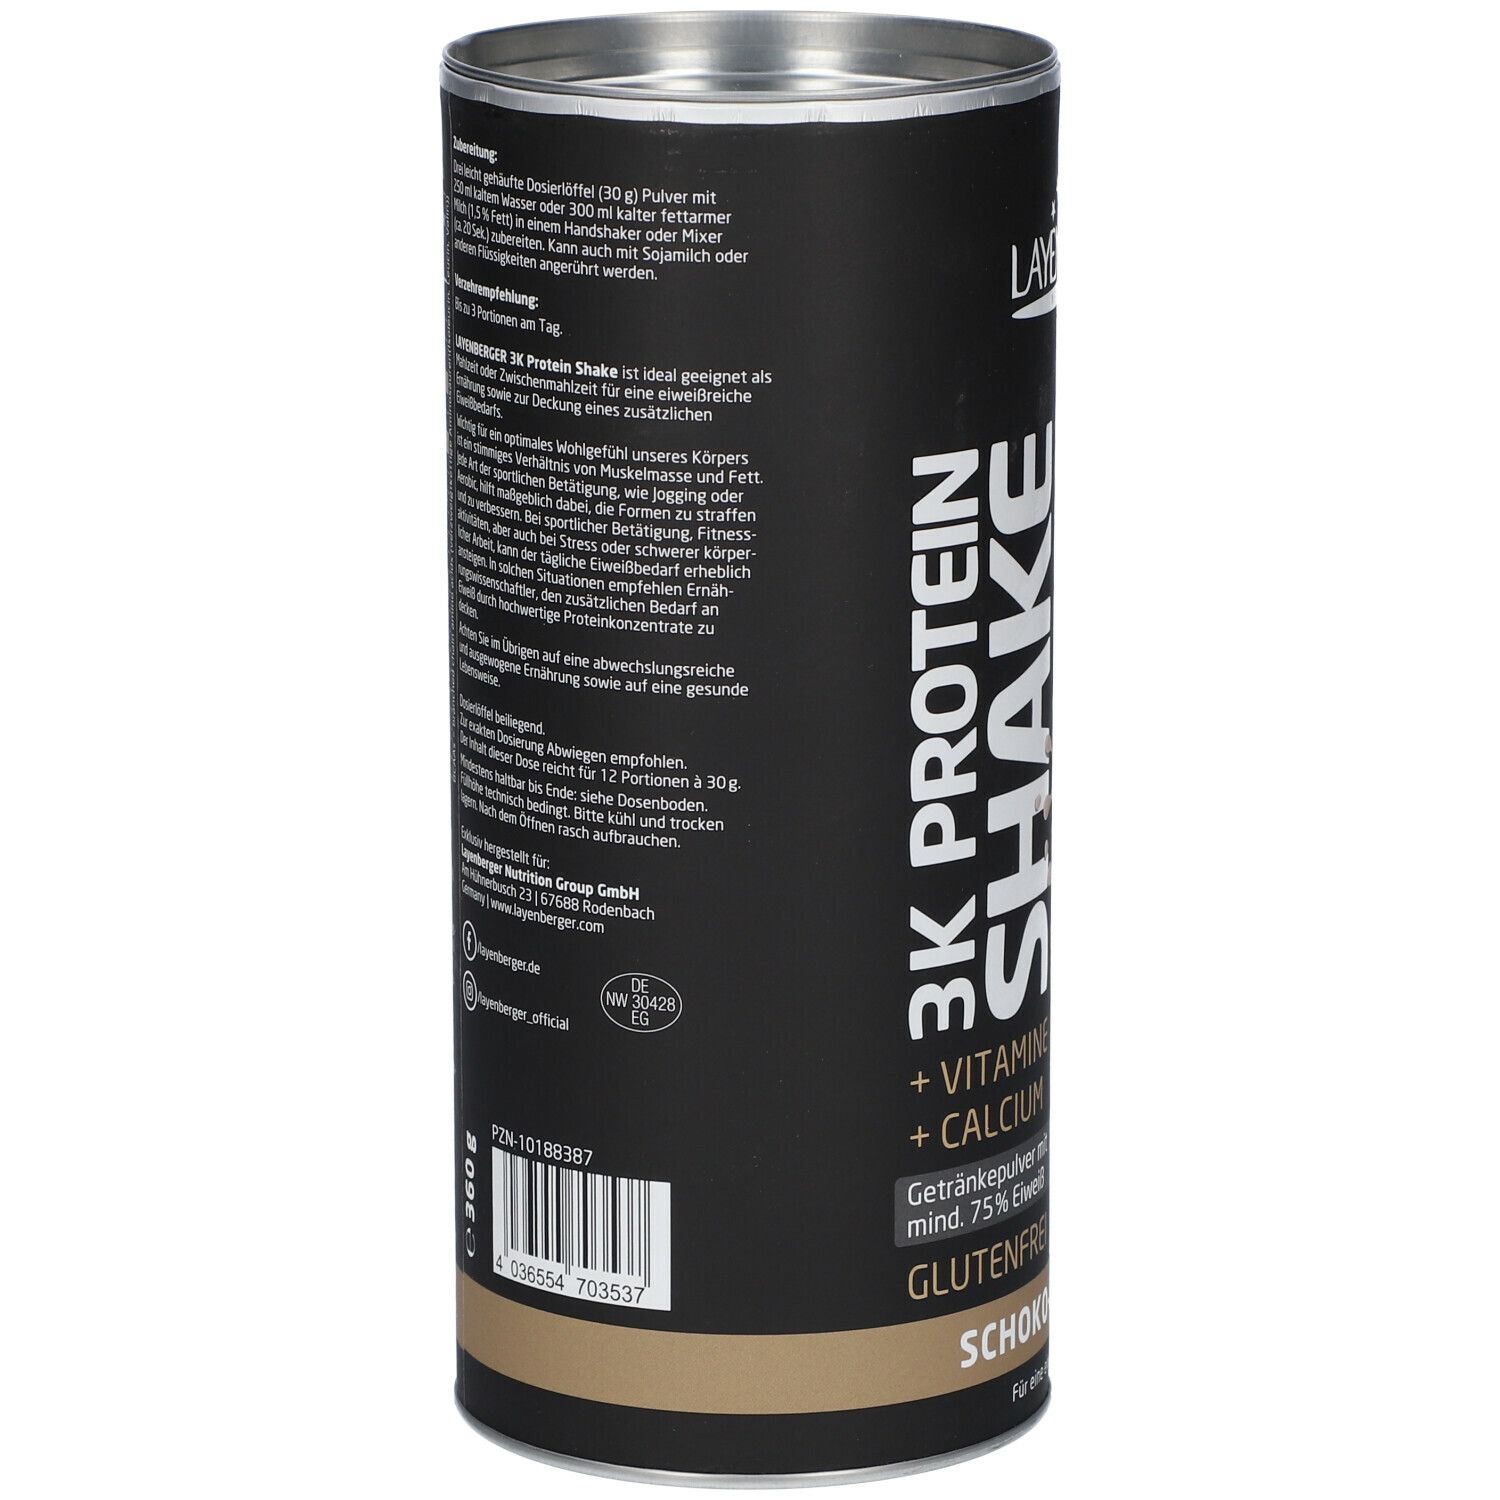 LAYENBERGER® 3K Protein Shake Schoko-Kaffee